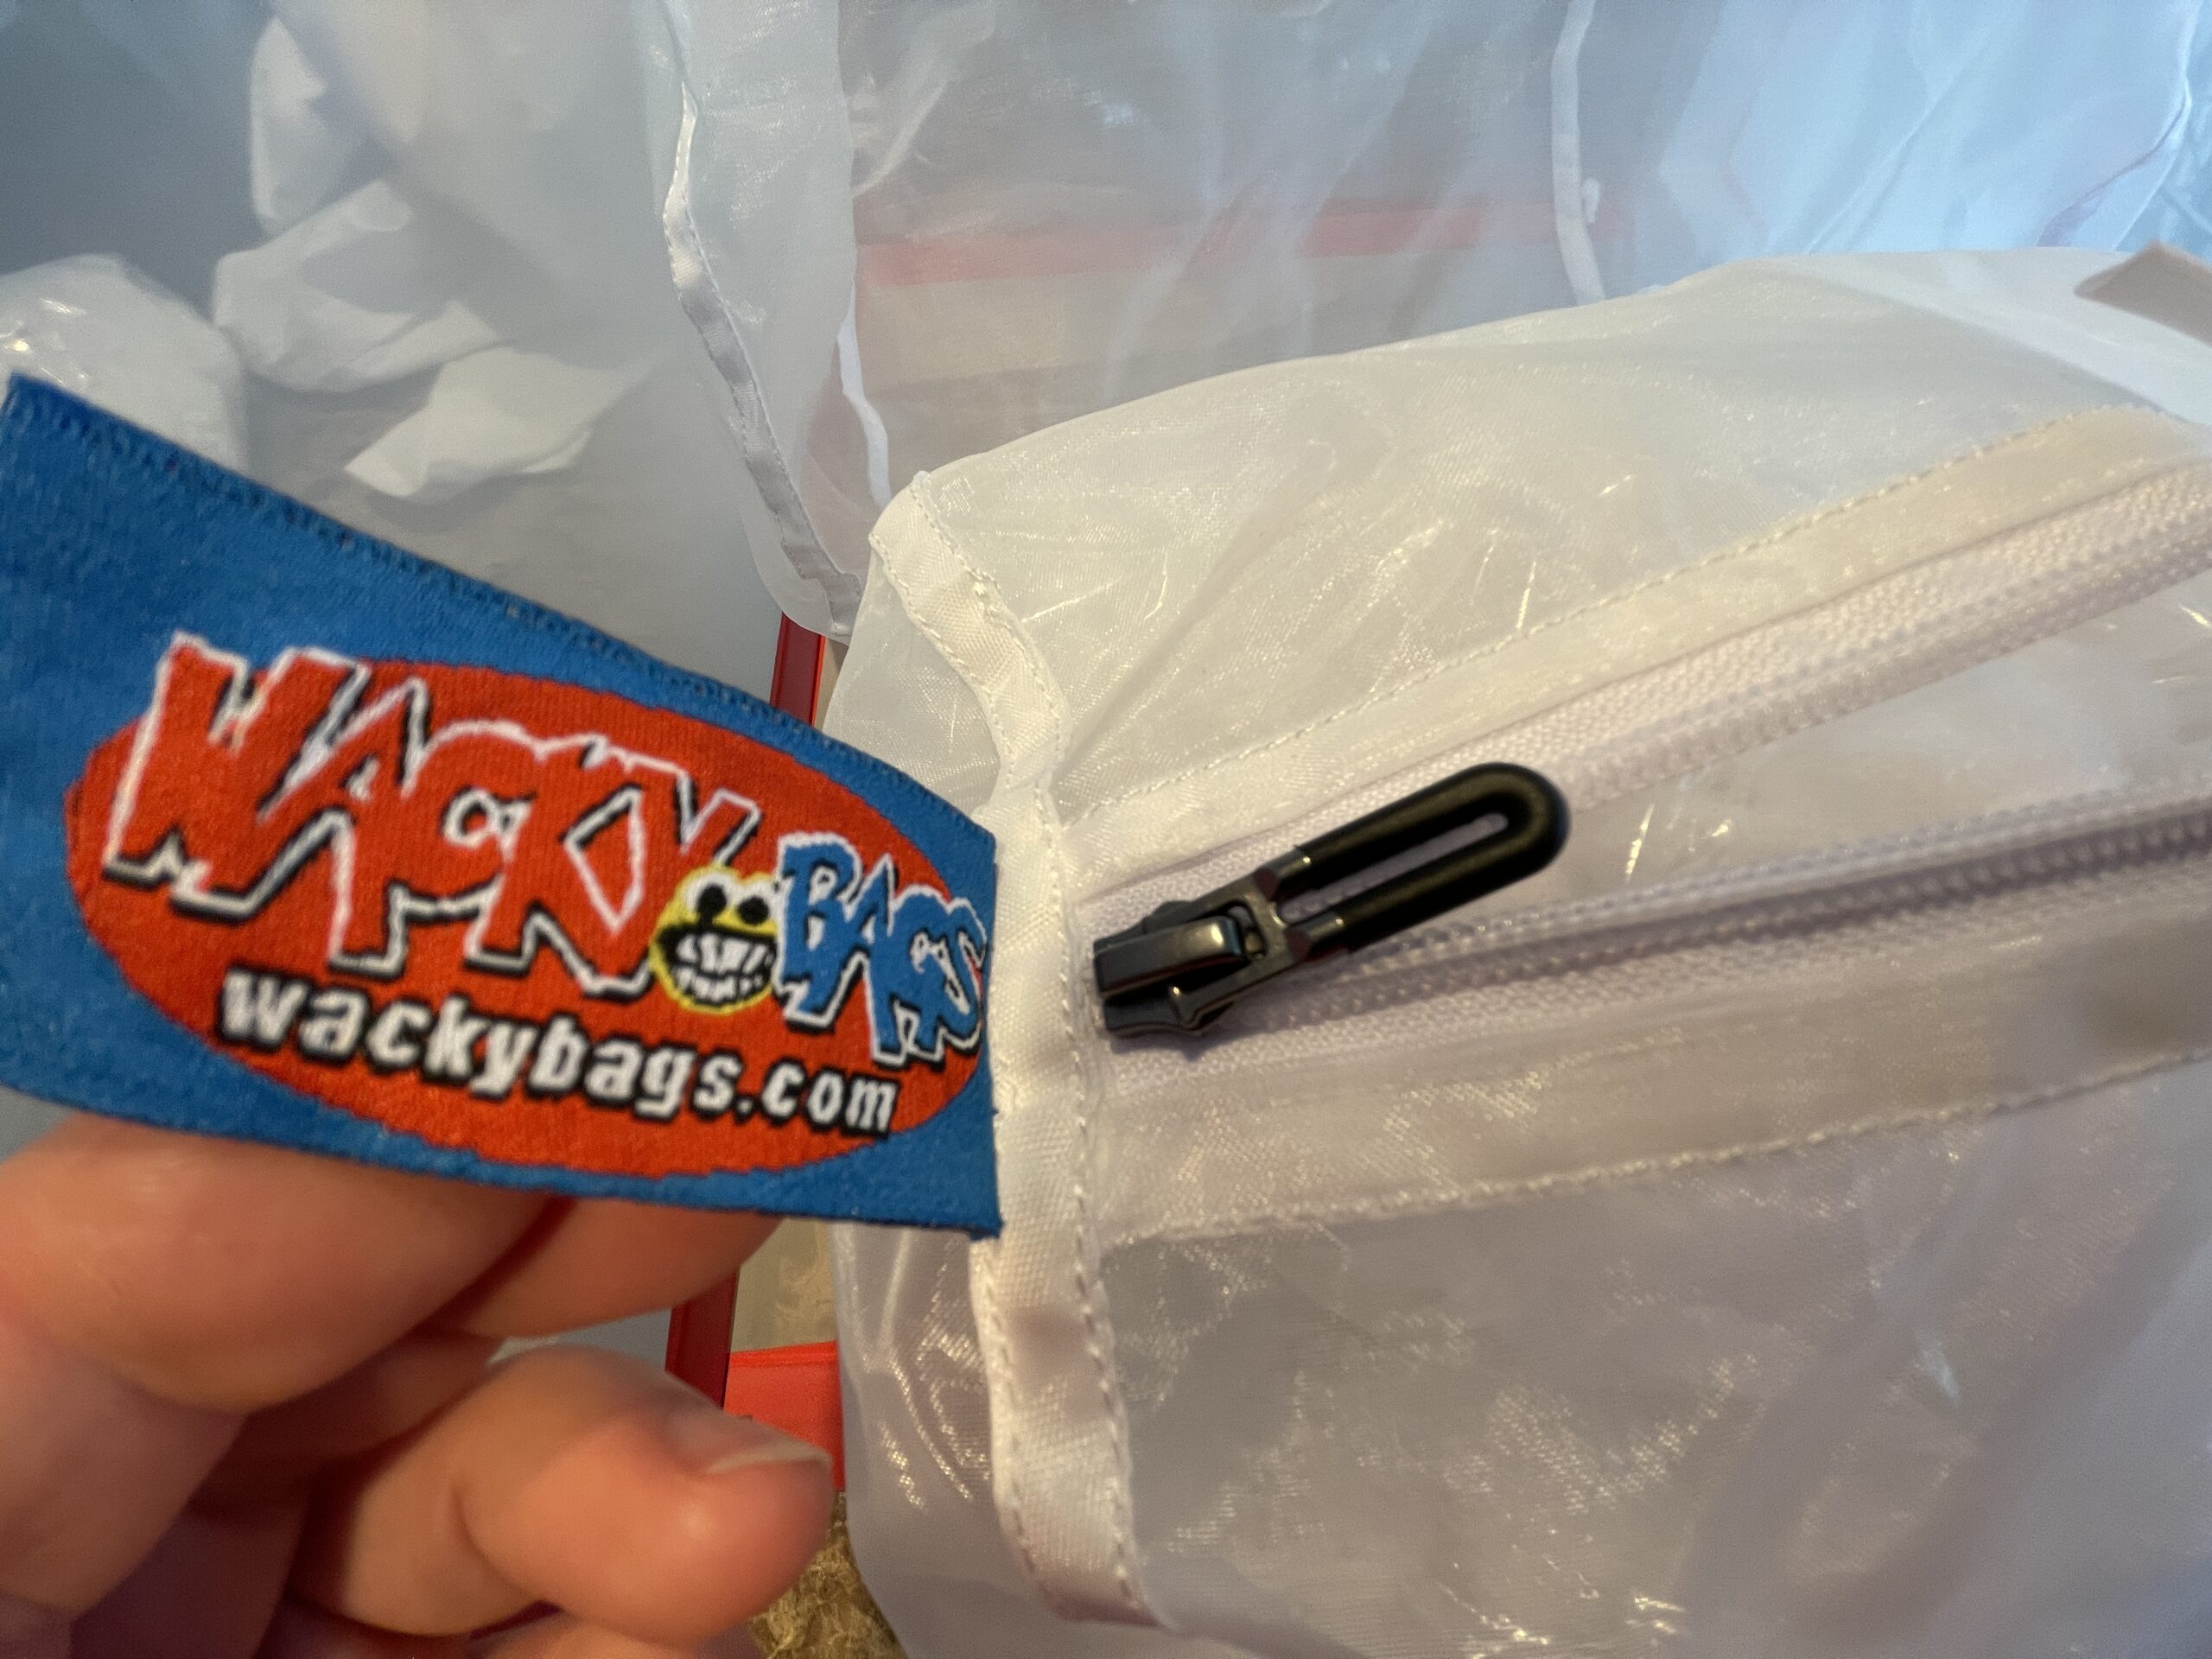 Big Zipper Duffel Bag – Hyperfly